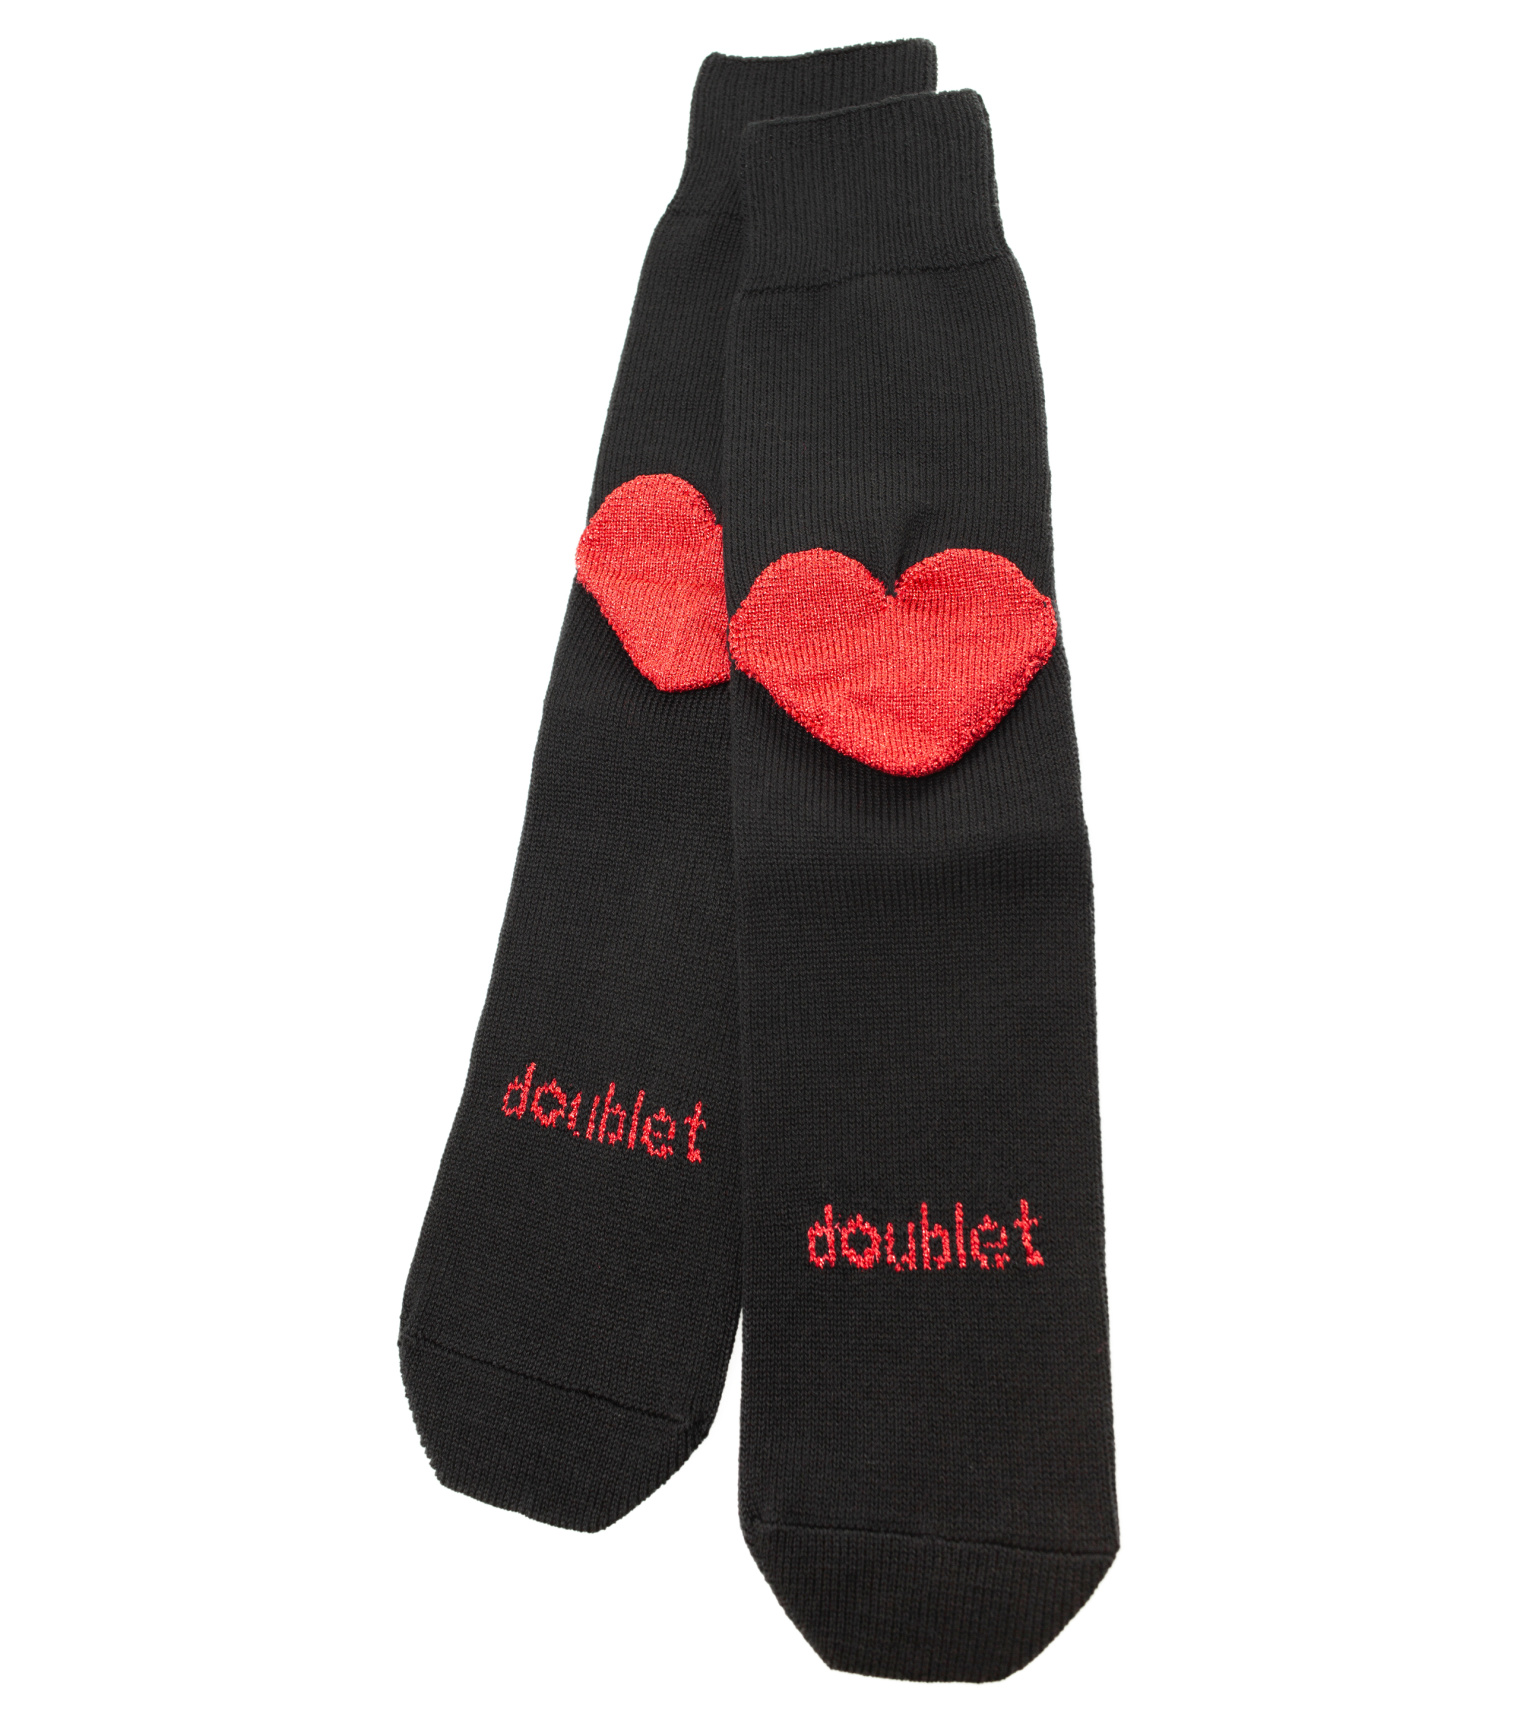 Doublet Socks